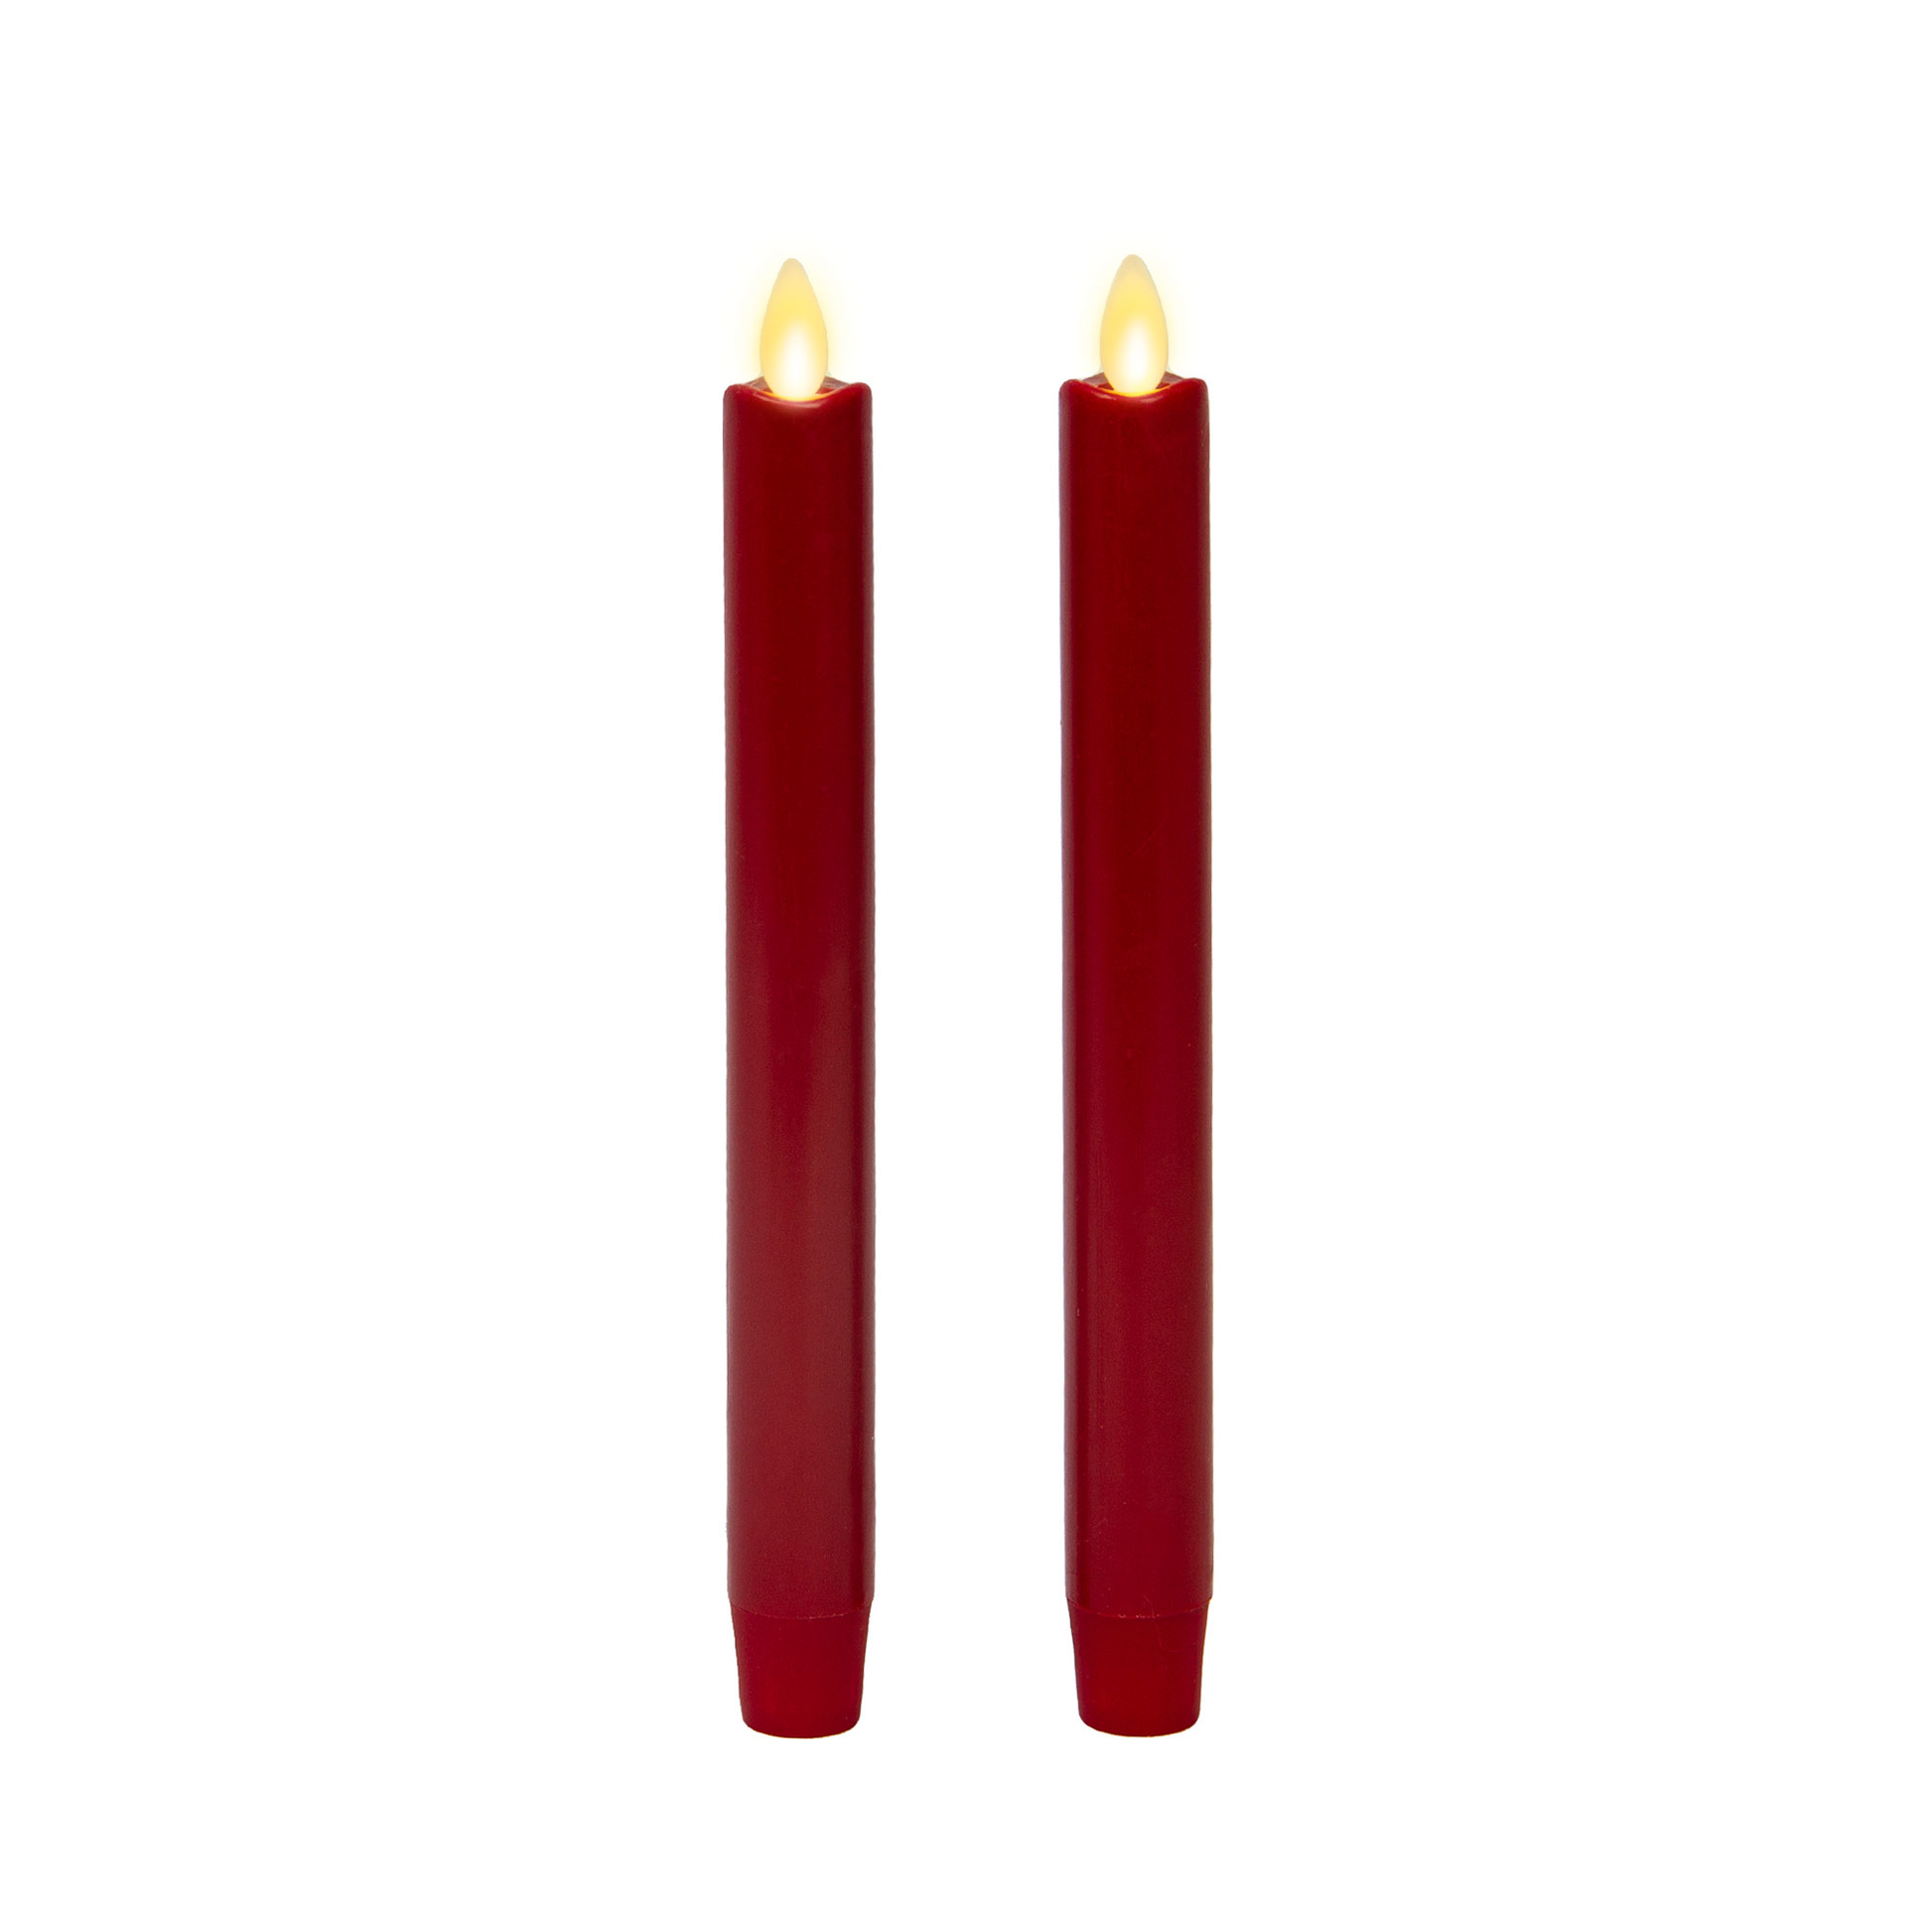 an image of Luminara's burgundy flameless candles